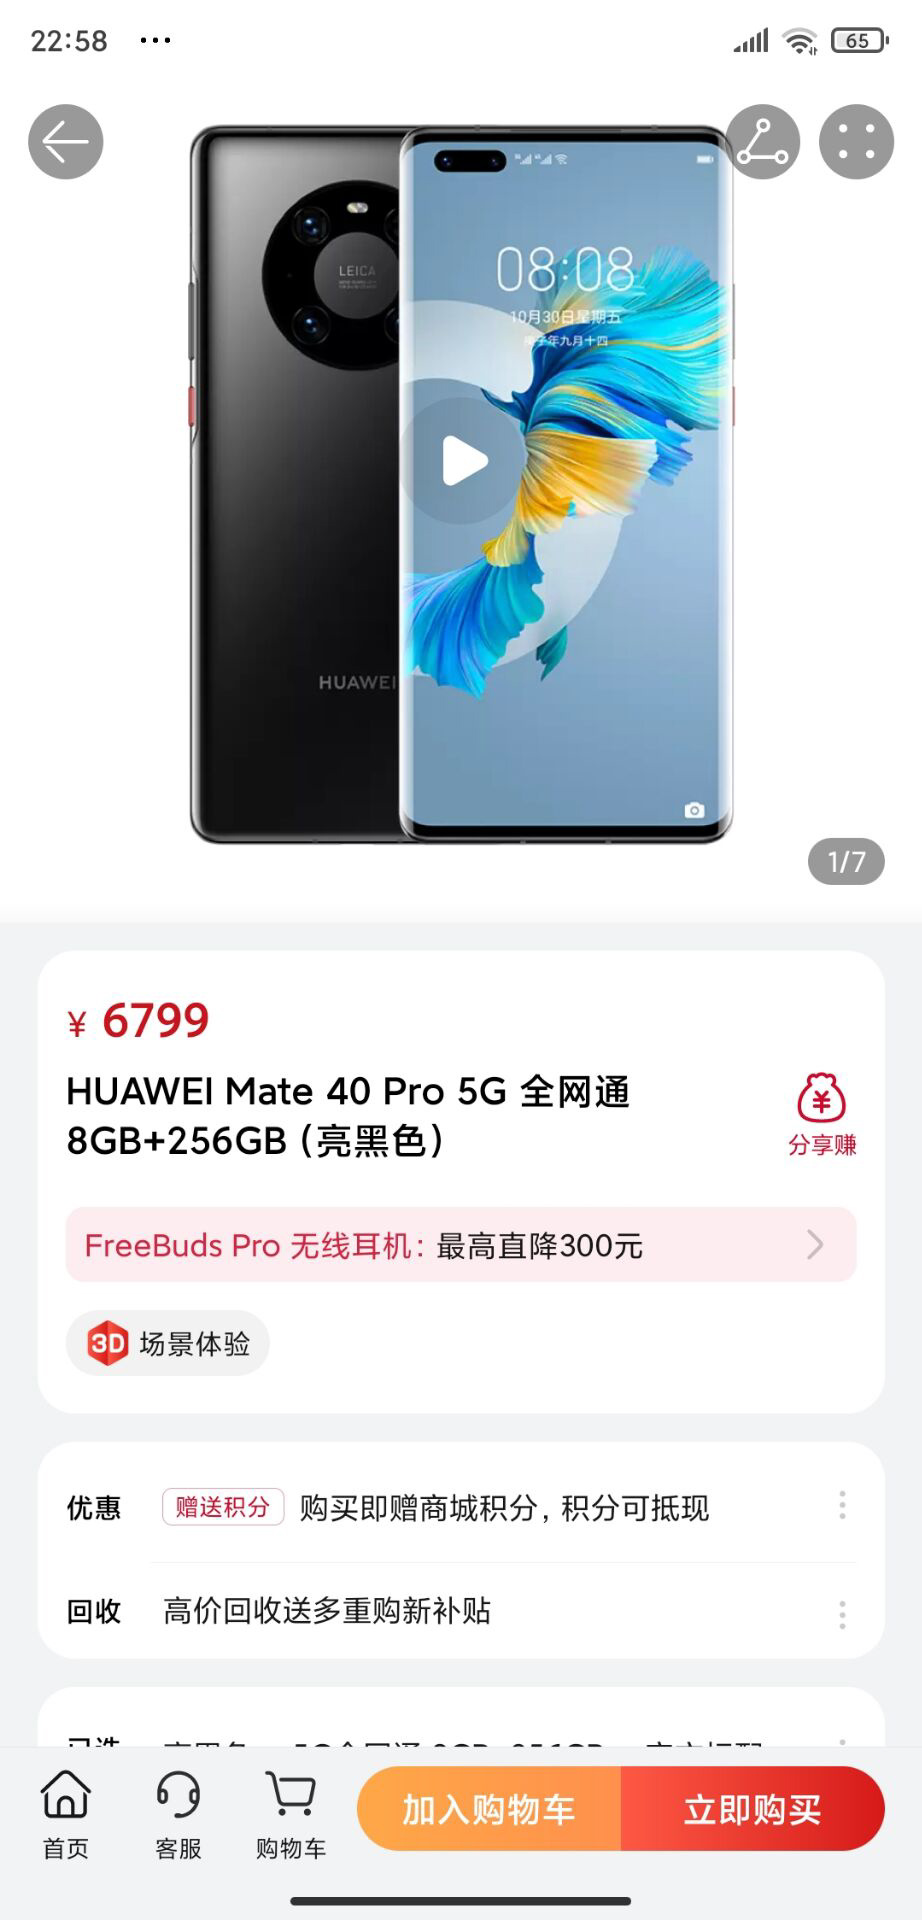 Huawei Mate 40 Pro 5G powered by Kirin 9000